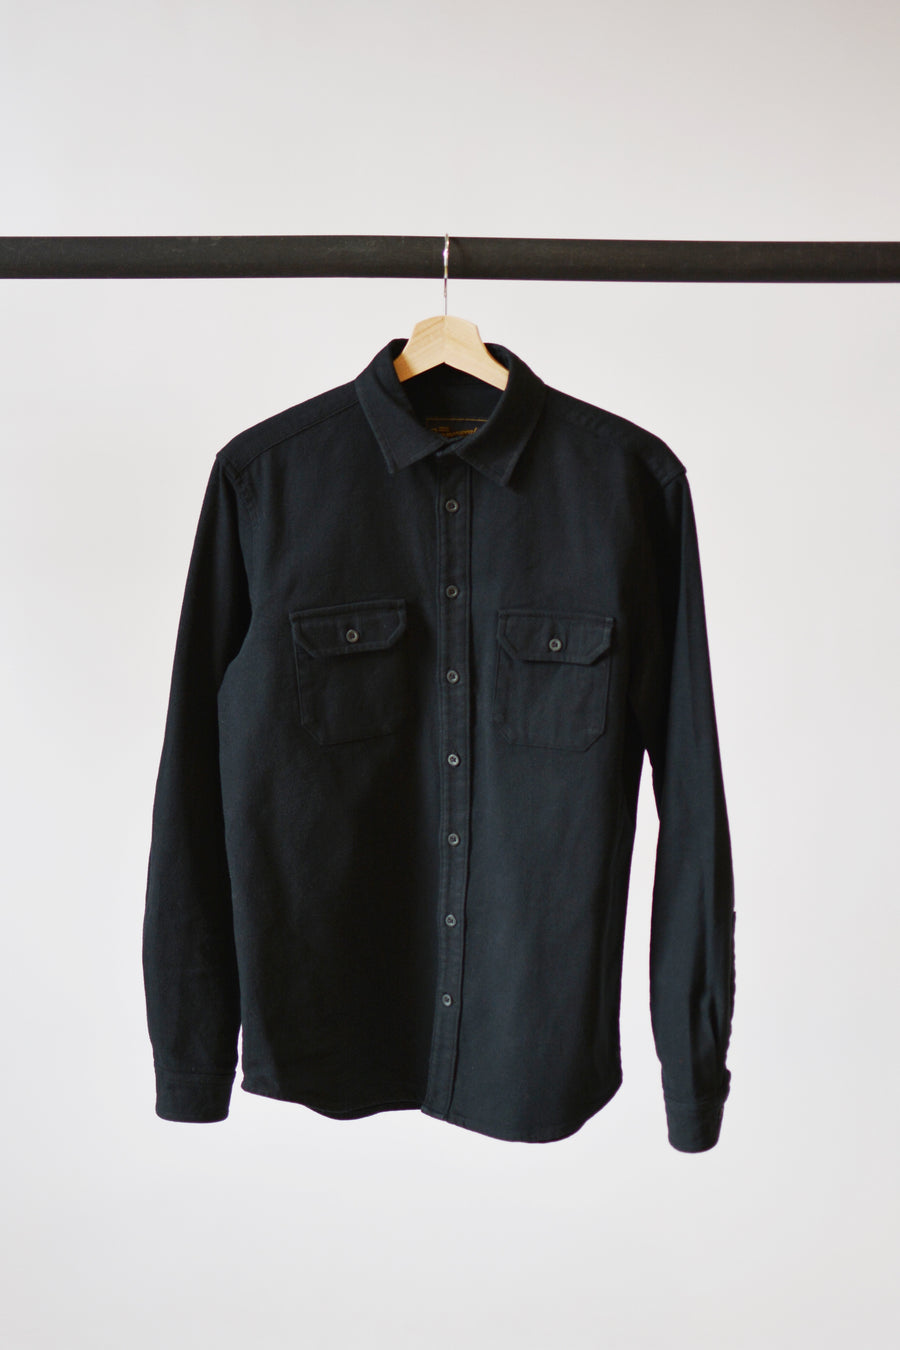 Organic Black Flannel | 131 - SIZE 38 (M)